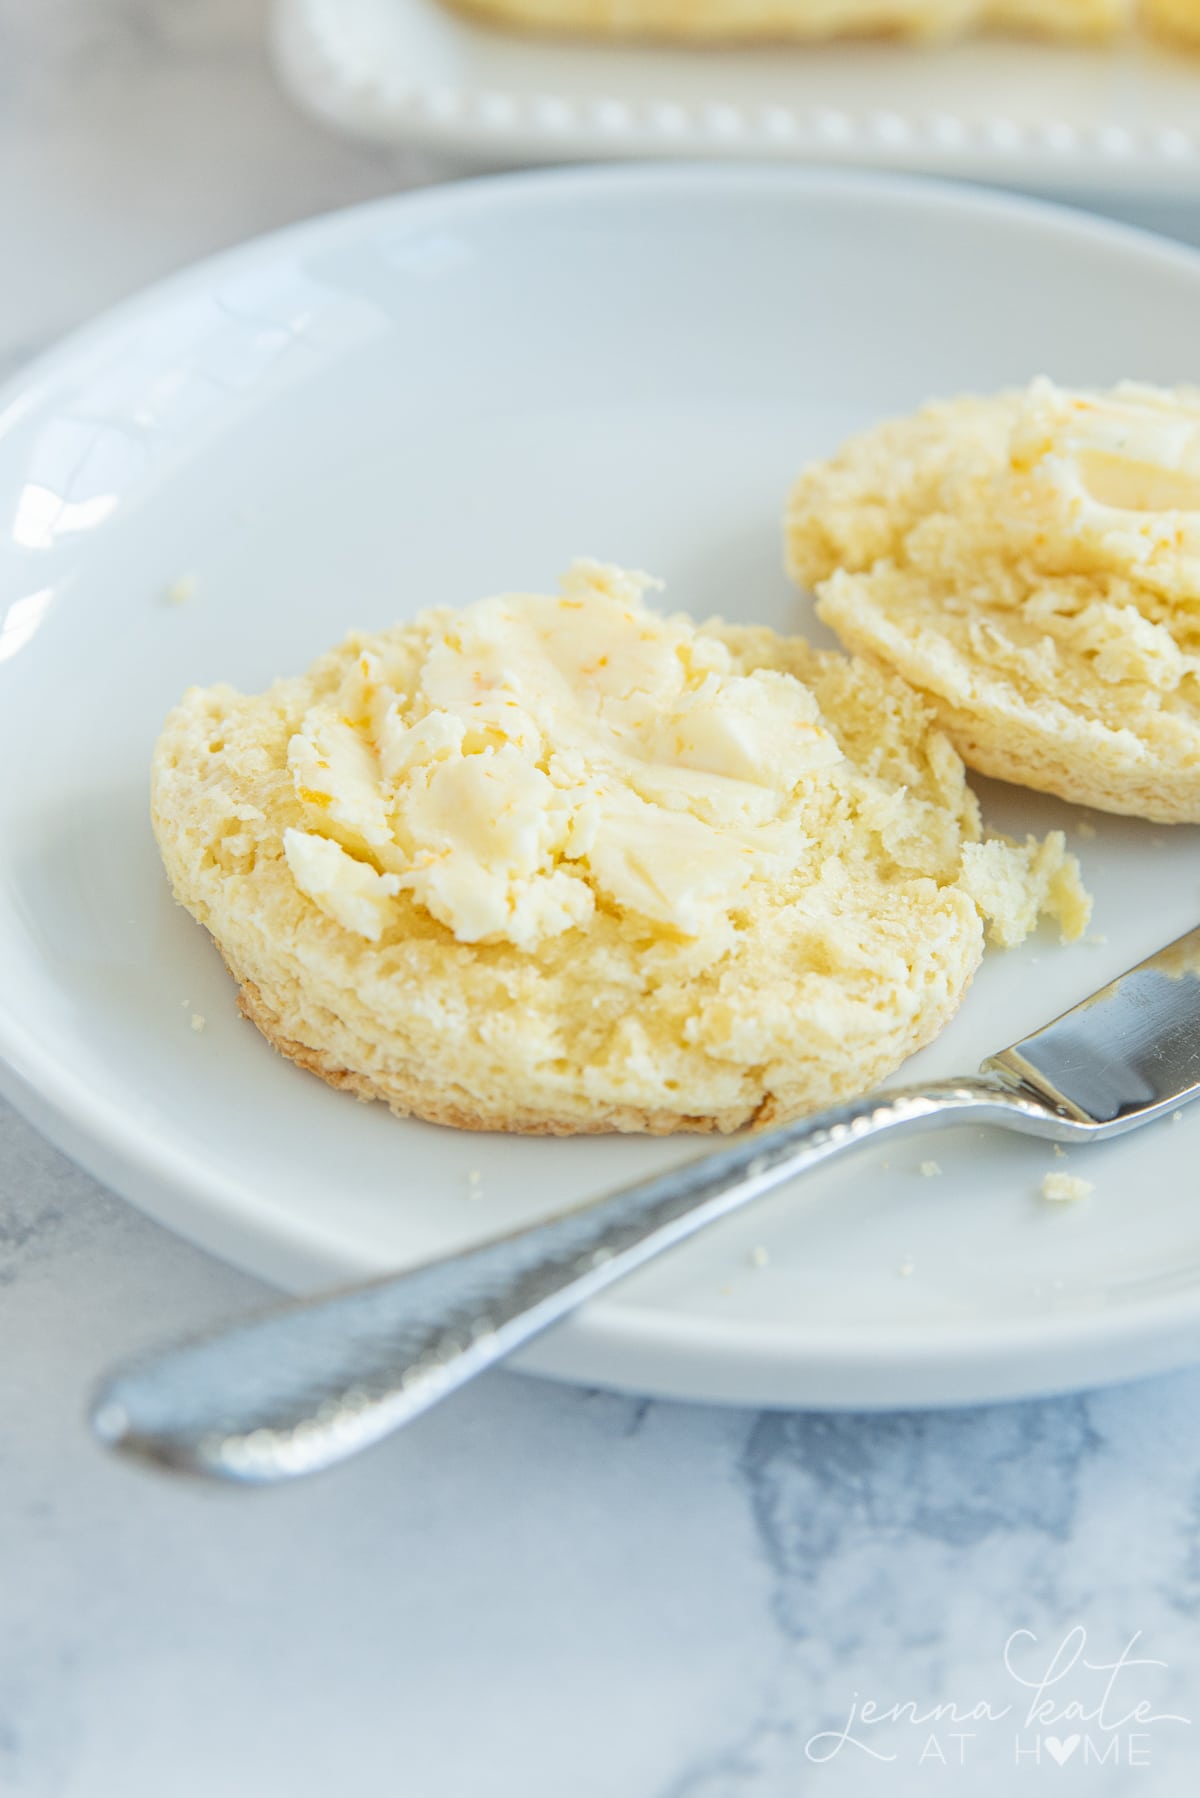 orange butter spread on freshly baked scones